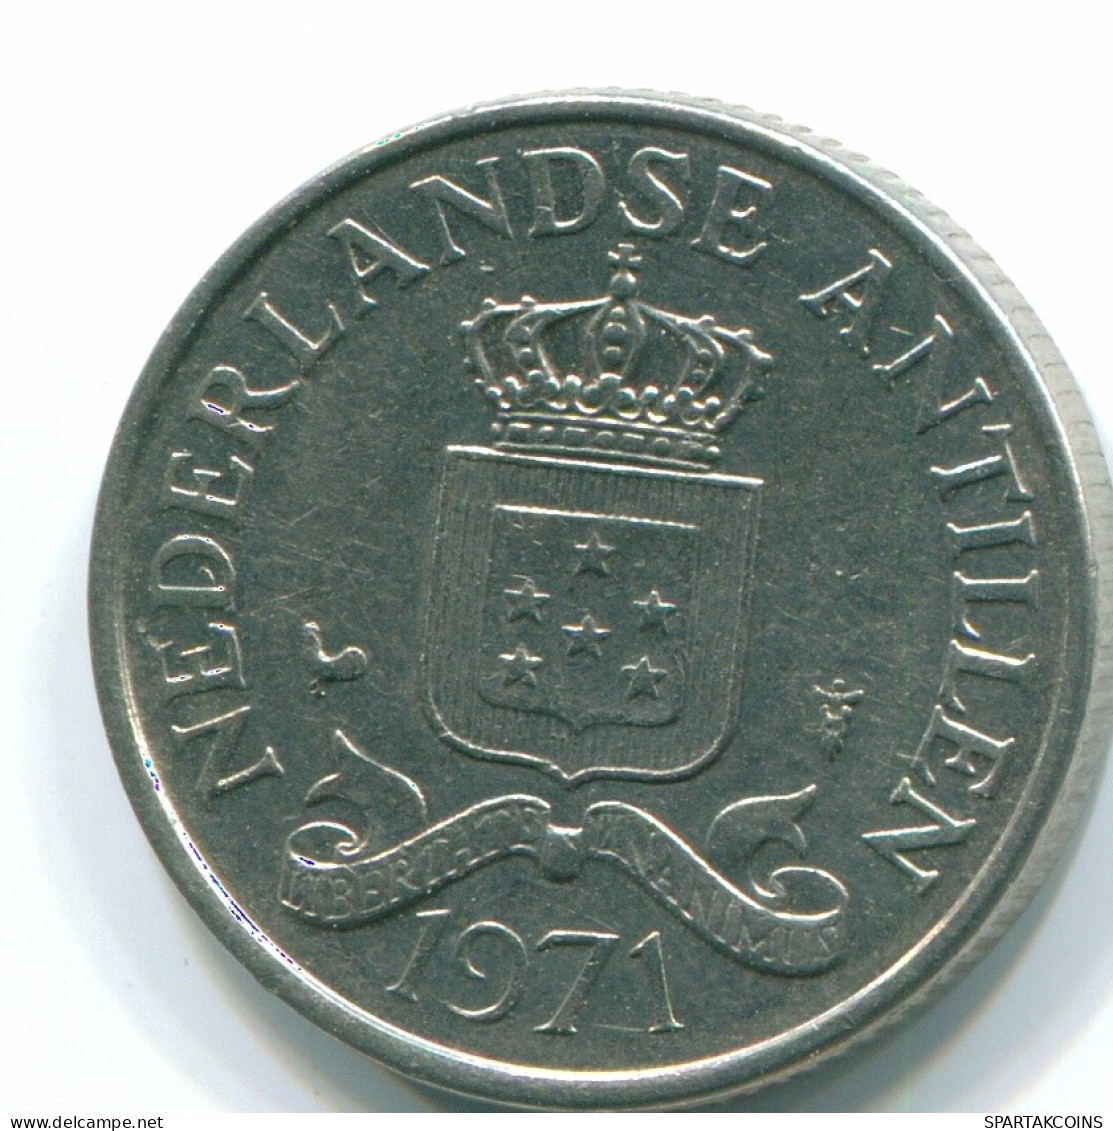 25 CENTS 1971 NIEDERLÄNDISCHE ANTILLEN Nickel Koloniale Münze #S11573.D.A - Netherlands Antilles